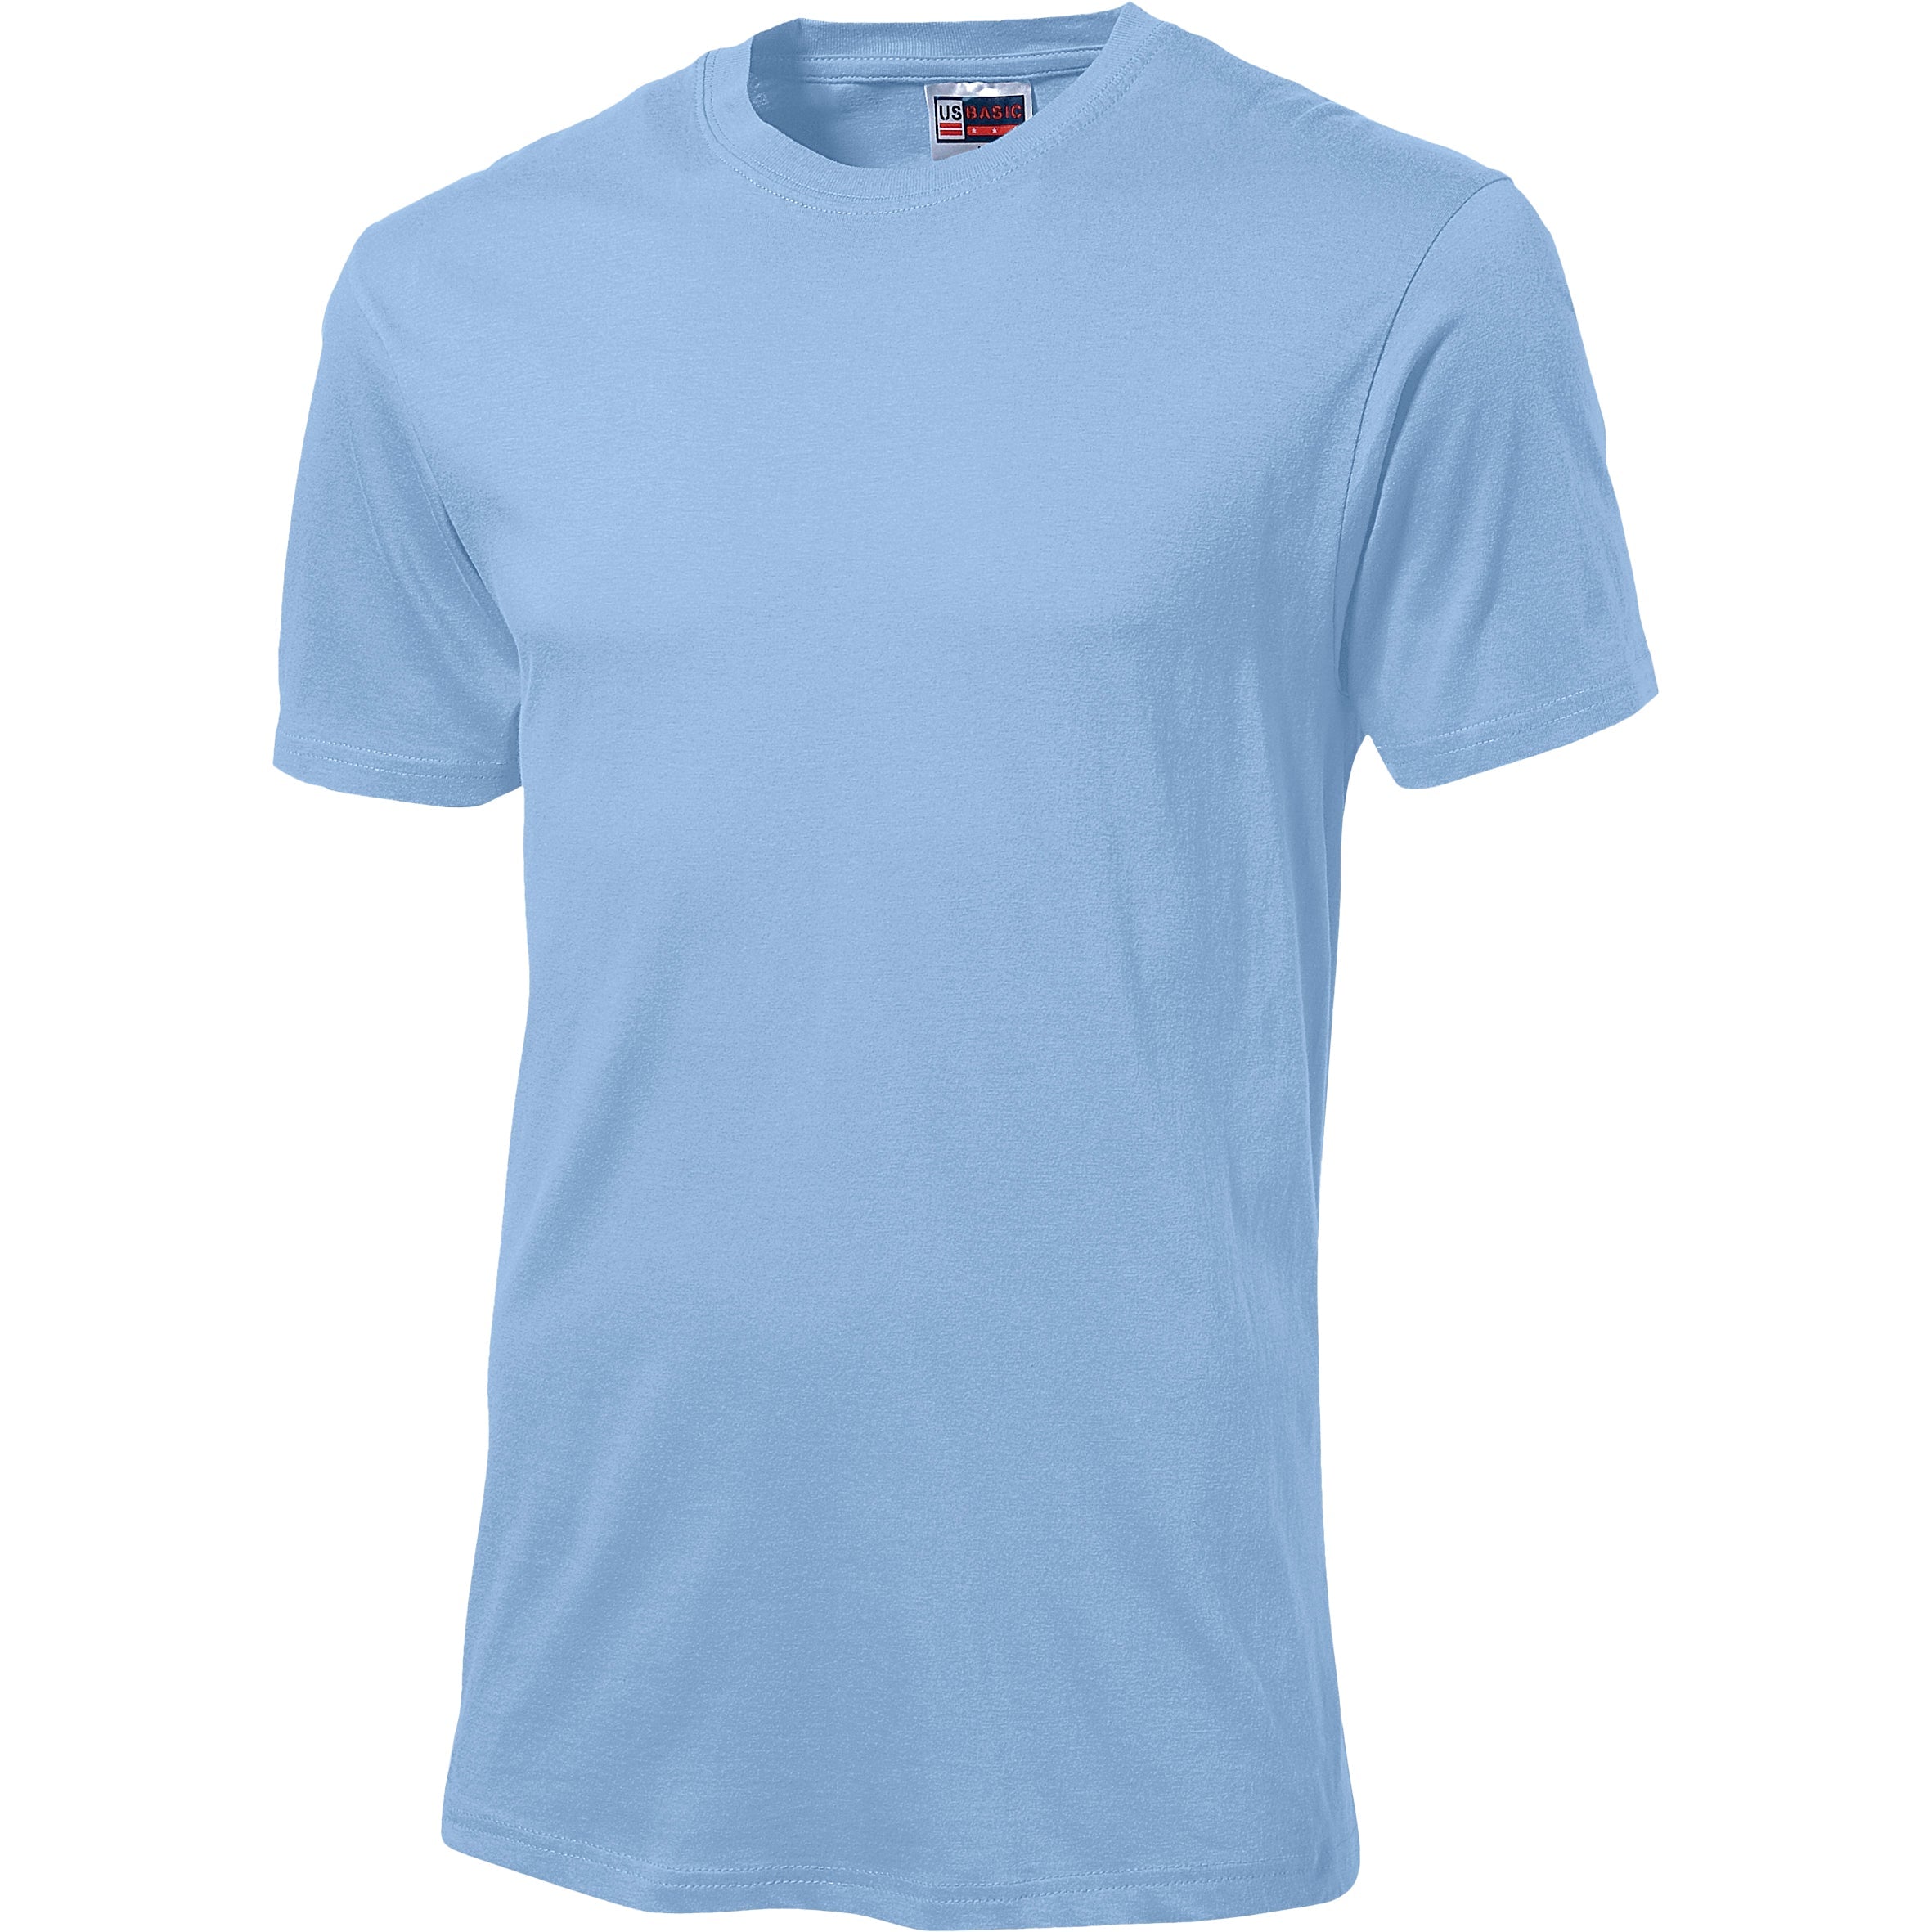 Unisex Super Club 165 T-Shirt-2XL-Light Blue-LB